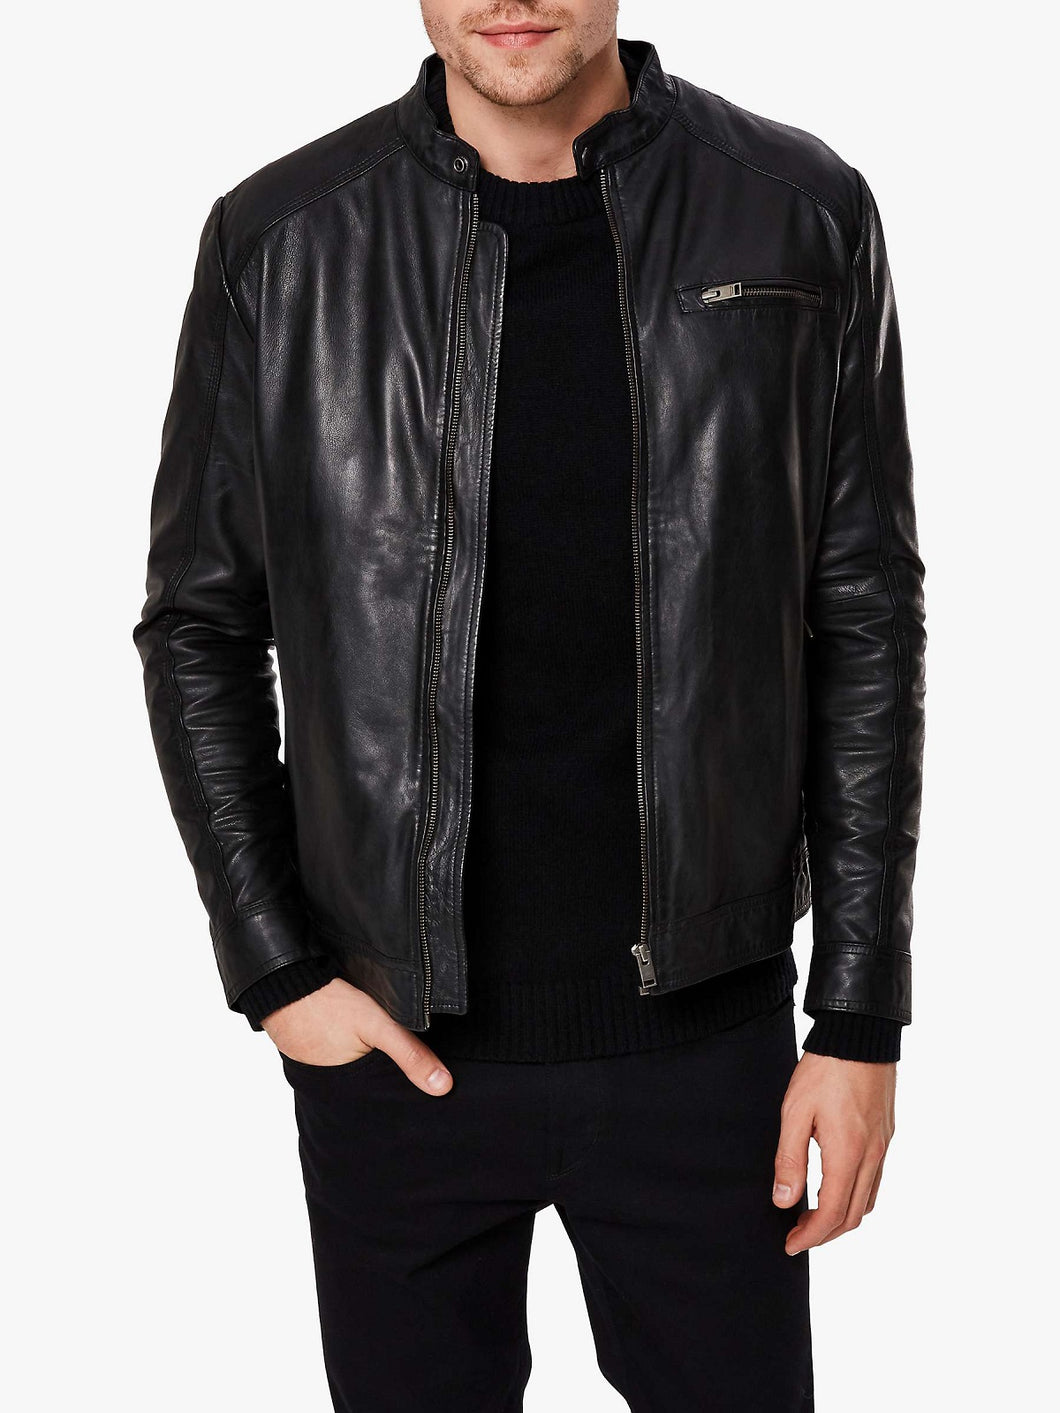 Majestic Black Jacket For Men - Shearling leather